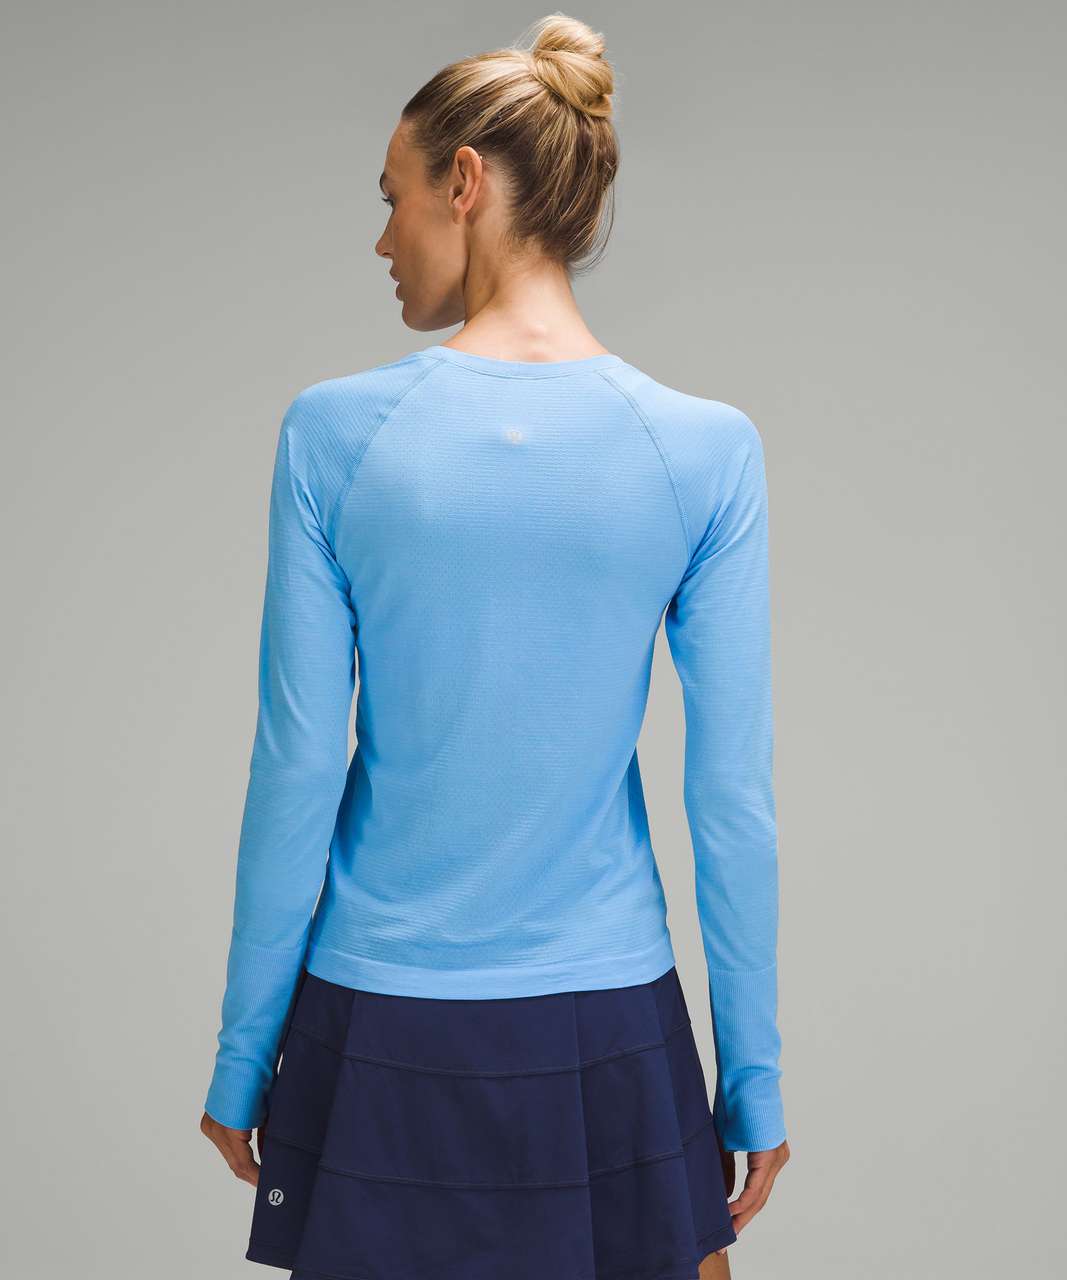 Lululemon Swiftly Tech Long-Sleeve Shirt 2.0 *Race Length - Aero Blue / Aero Blue